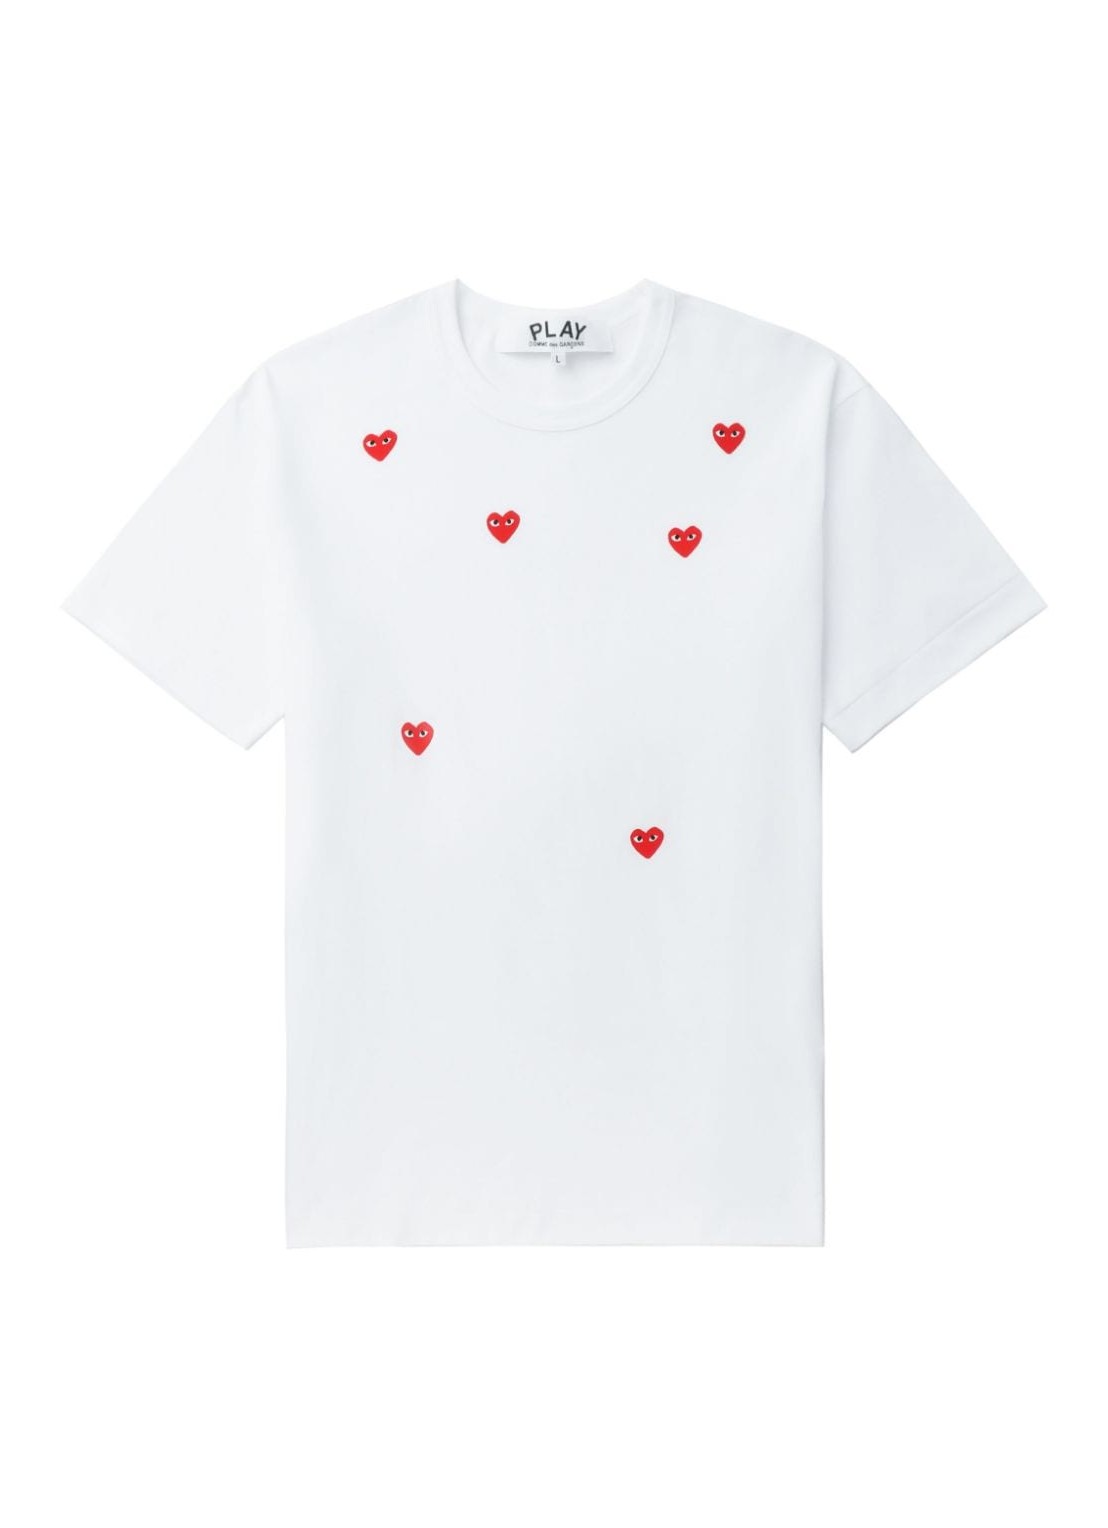 Camiseta comme des garcons t-shirt manmany heart short sleeve t-shirt - axt338051 white talla XXL
 